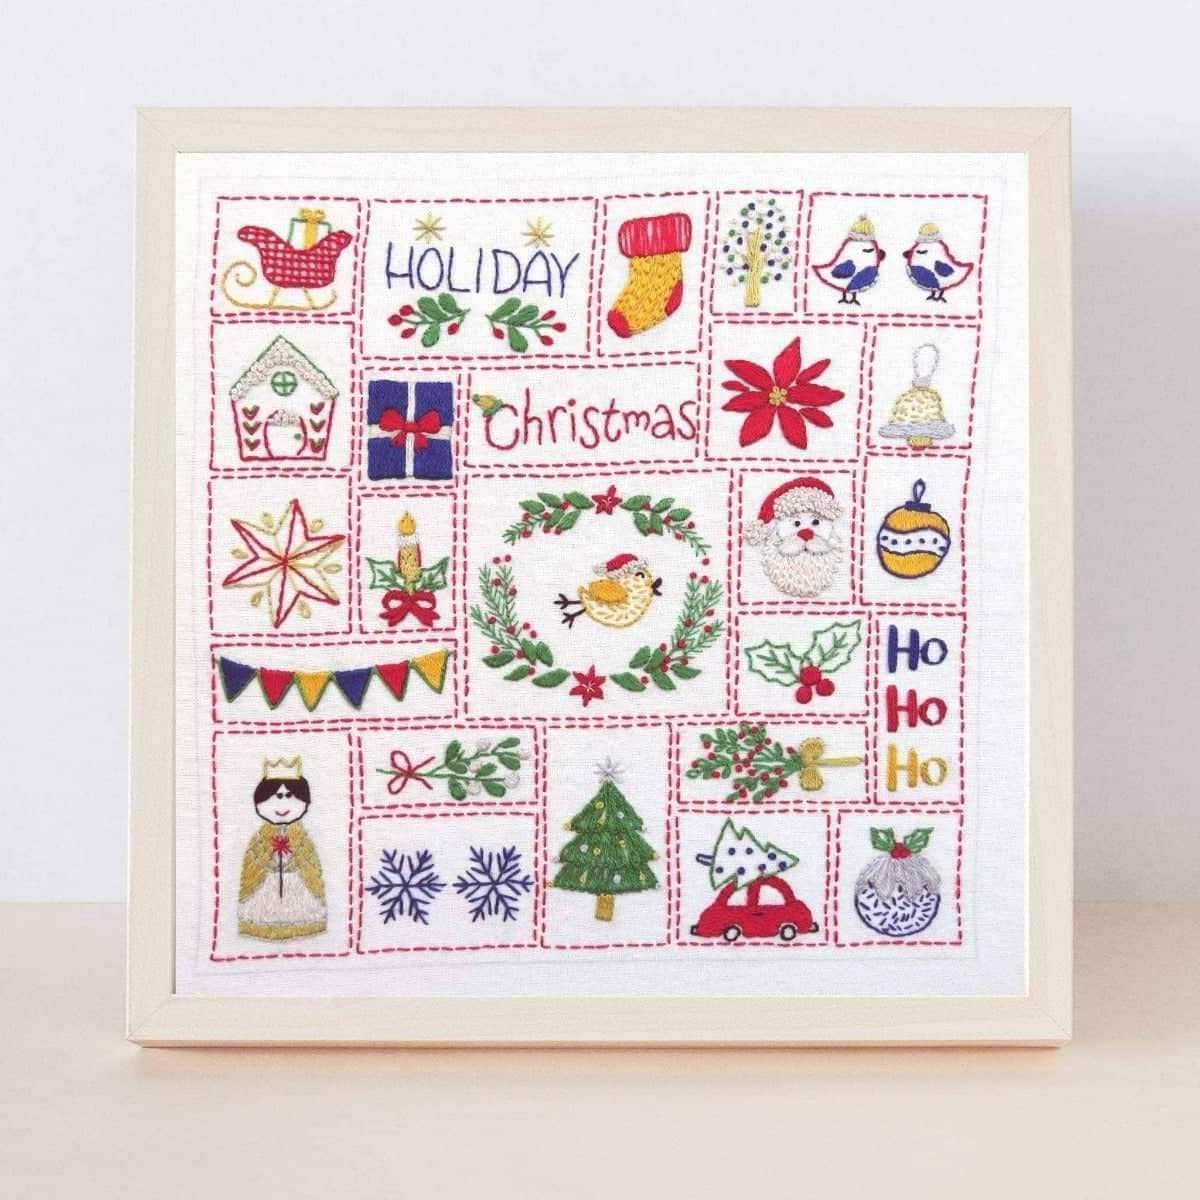  Amosfun 2 Sets Christmas Tree Cross Stitch Embroidery